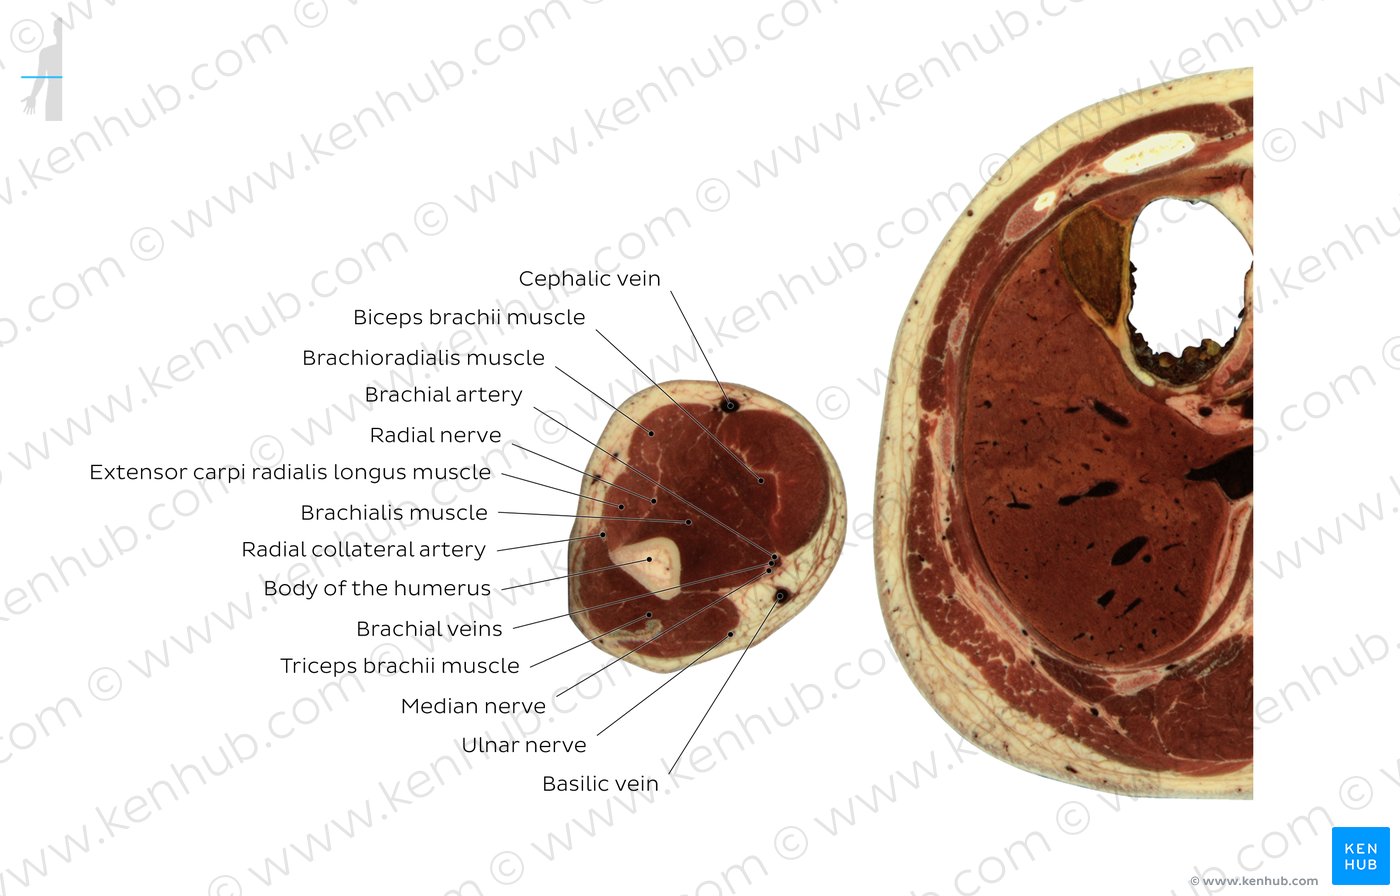 Brachialis muscle level: Overview